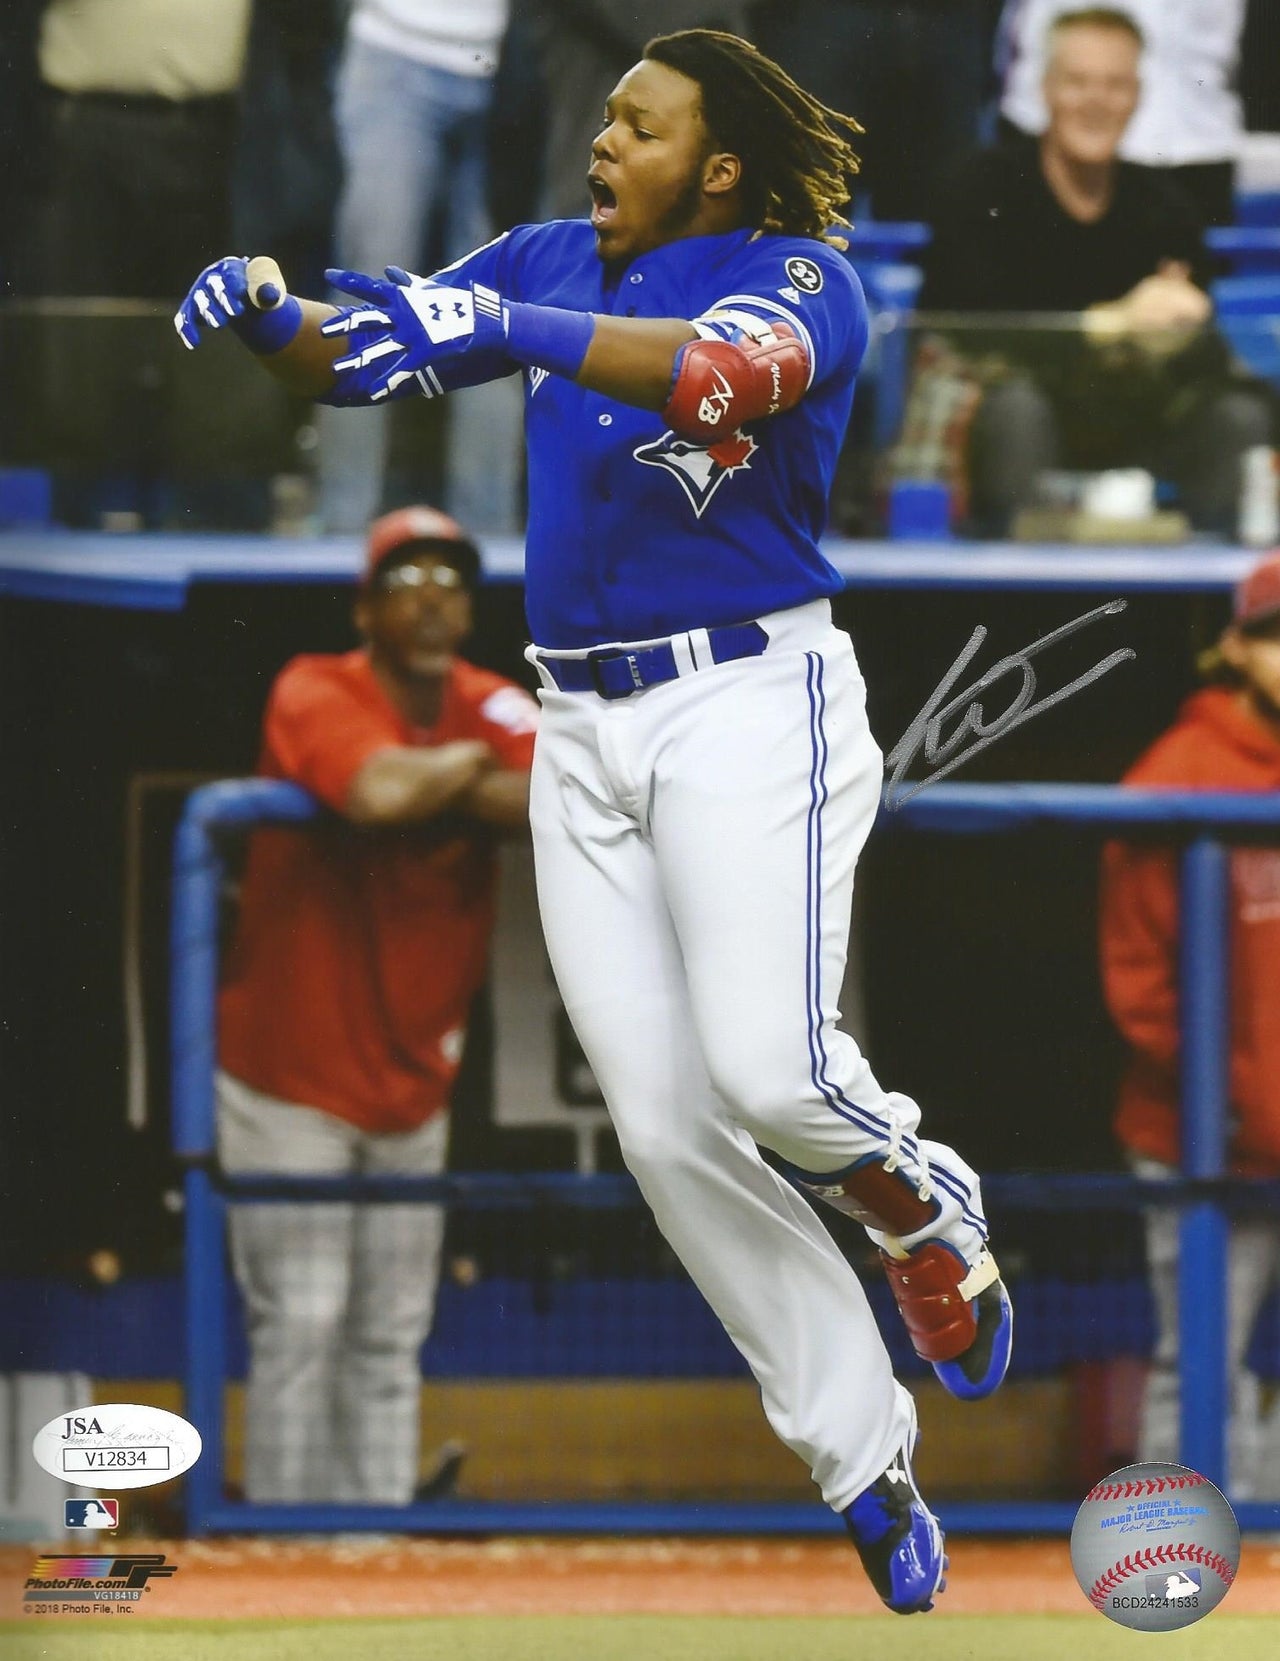 Lids Vladimir Guerrero Jr. Toronto Blue Jays Topps Autographed 8 x 10  Fielding Photograph